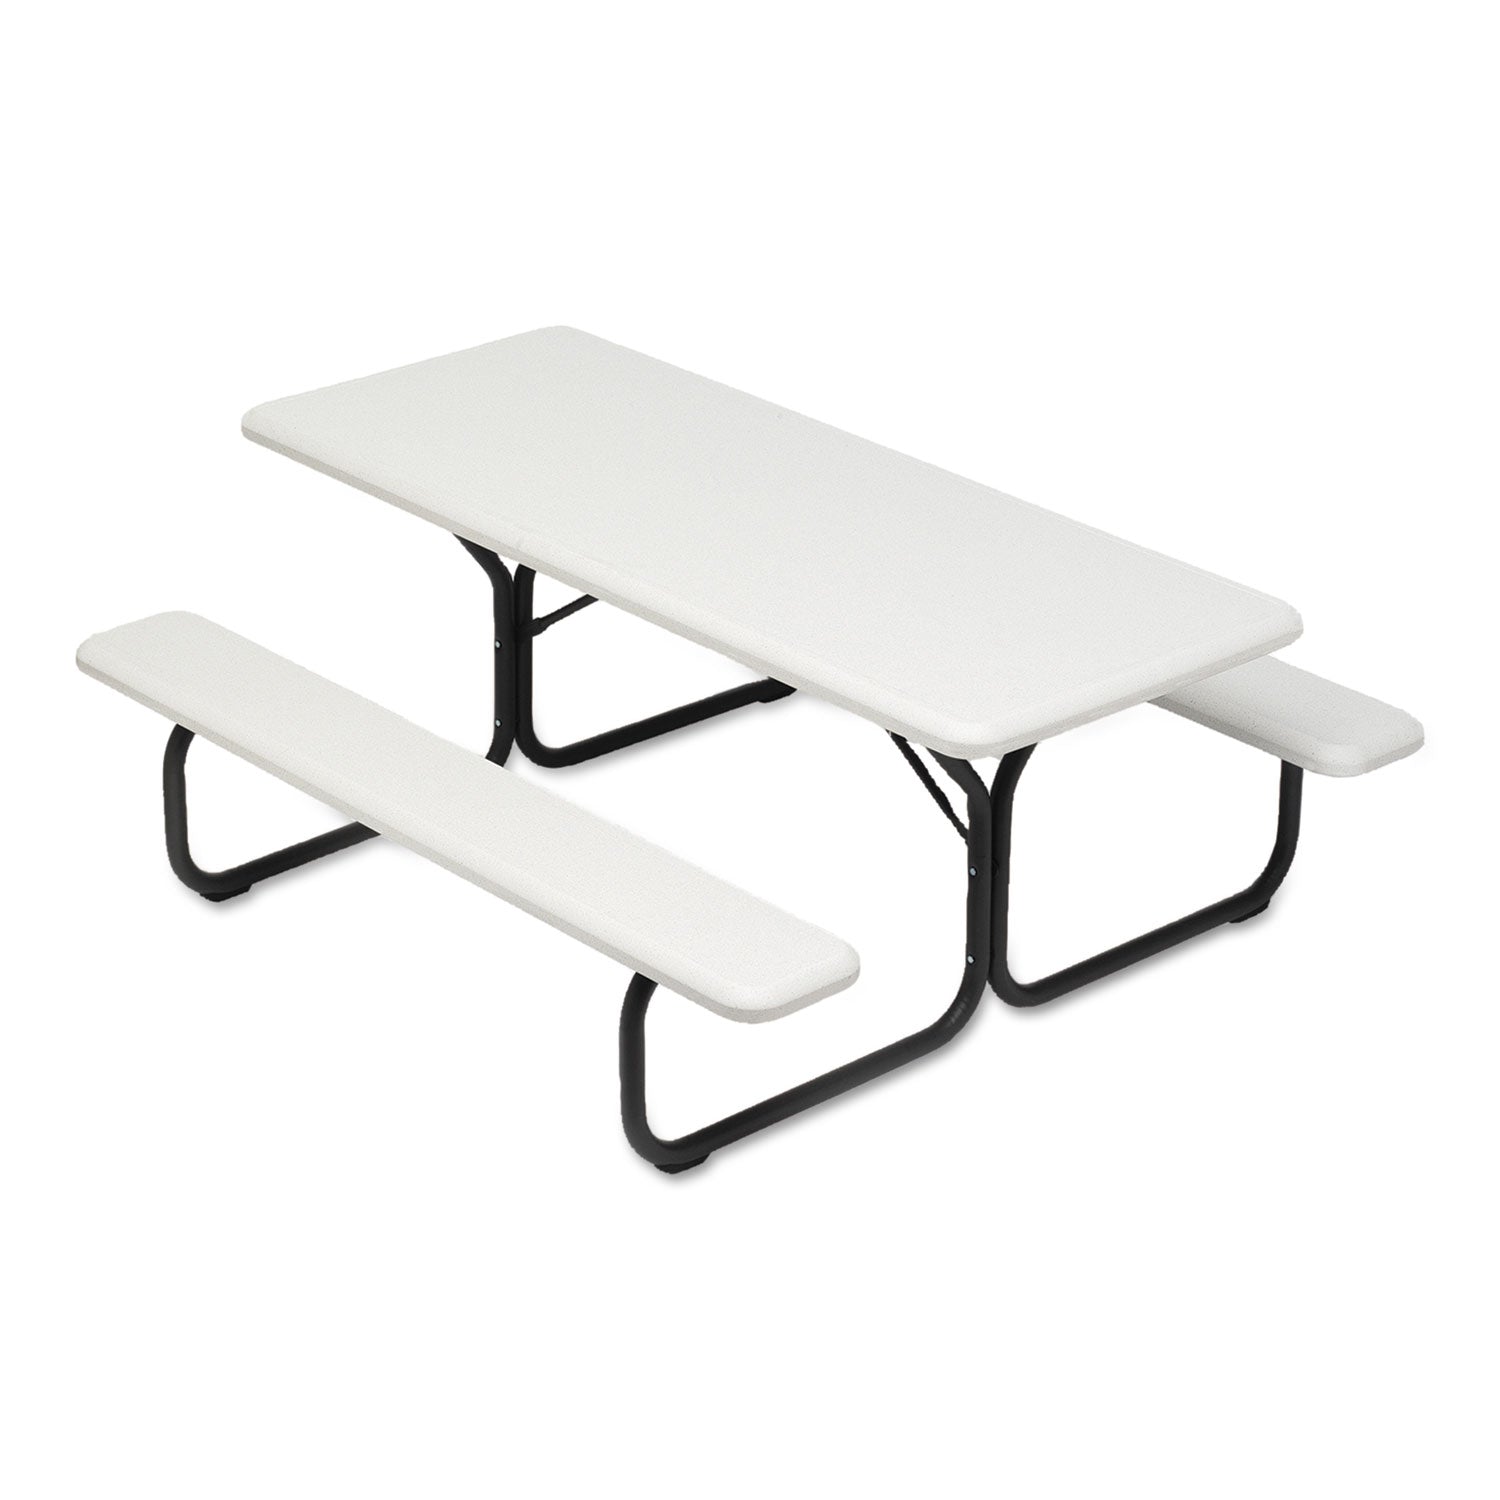 IndestrucTable Classic Picnic Table, Rectangular, 72" x 30" x 29", Platinum/Gray - 